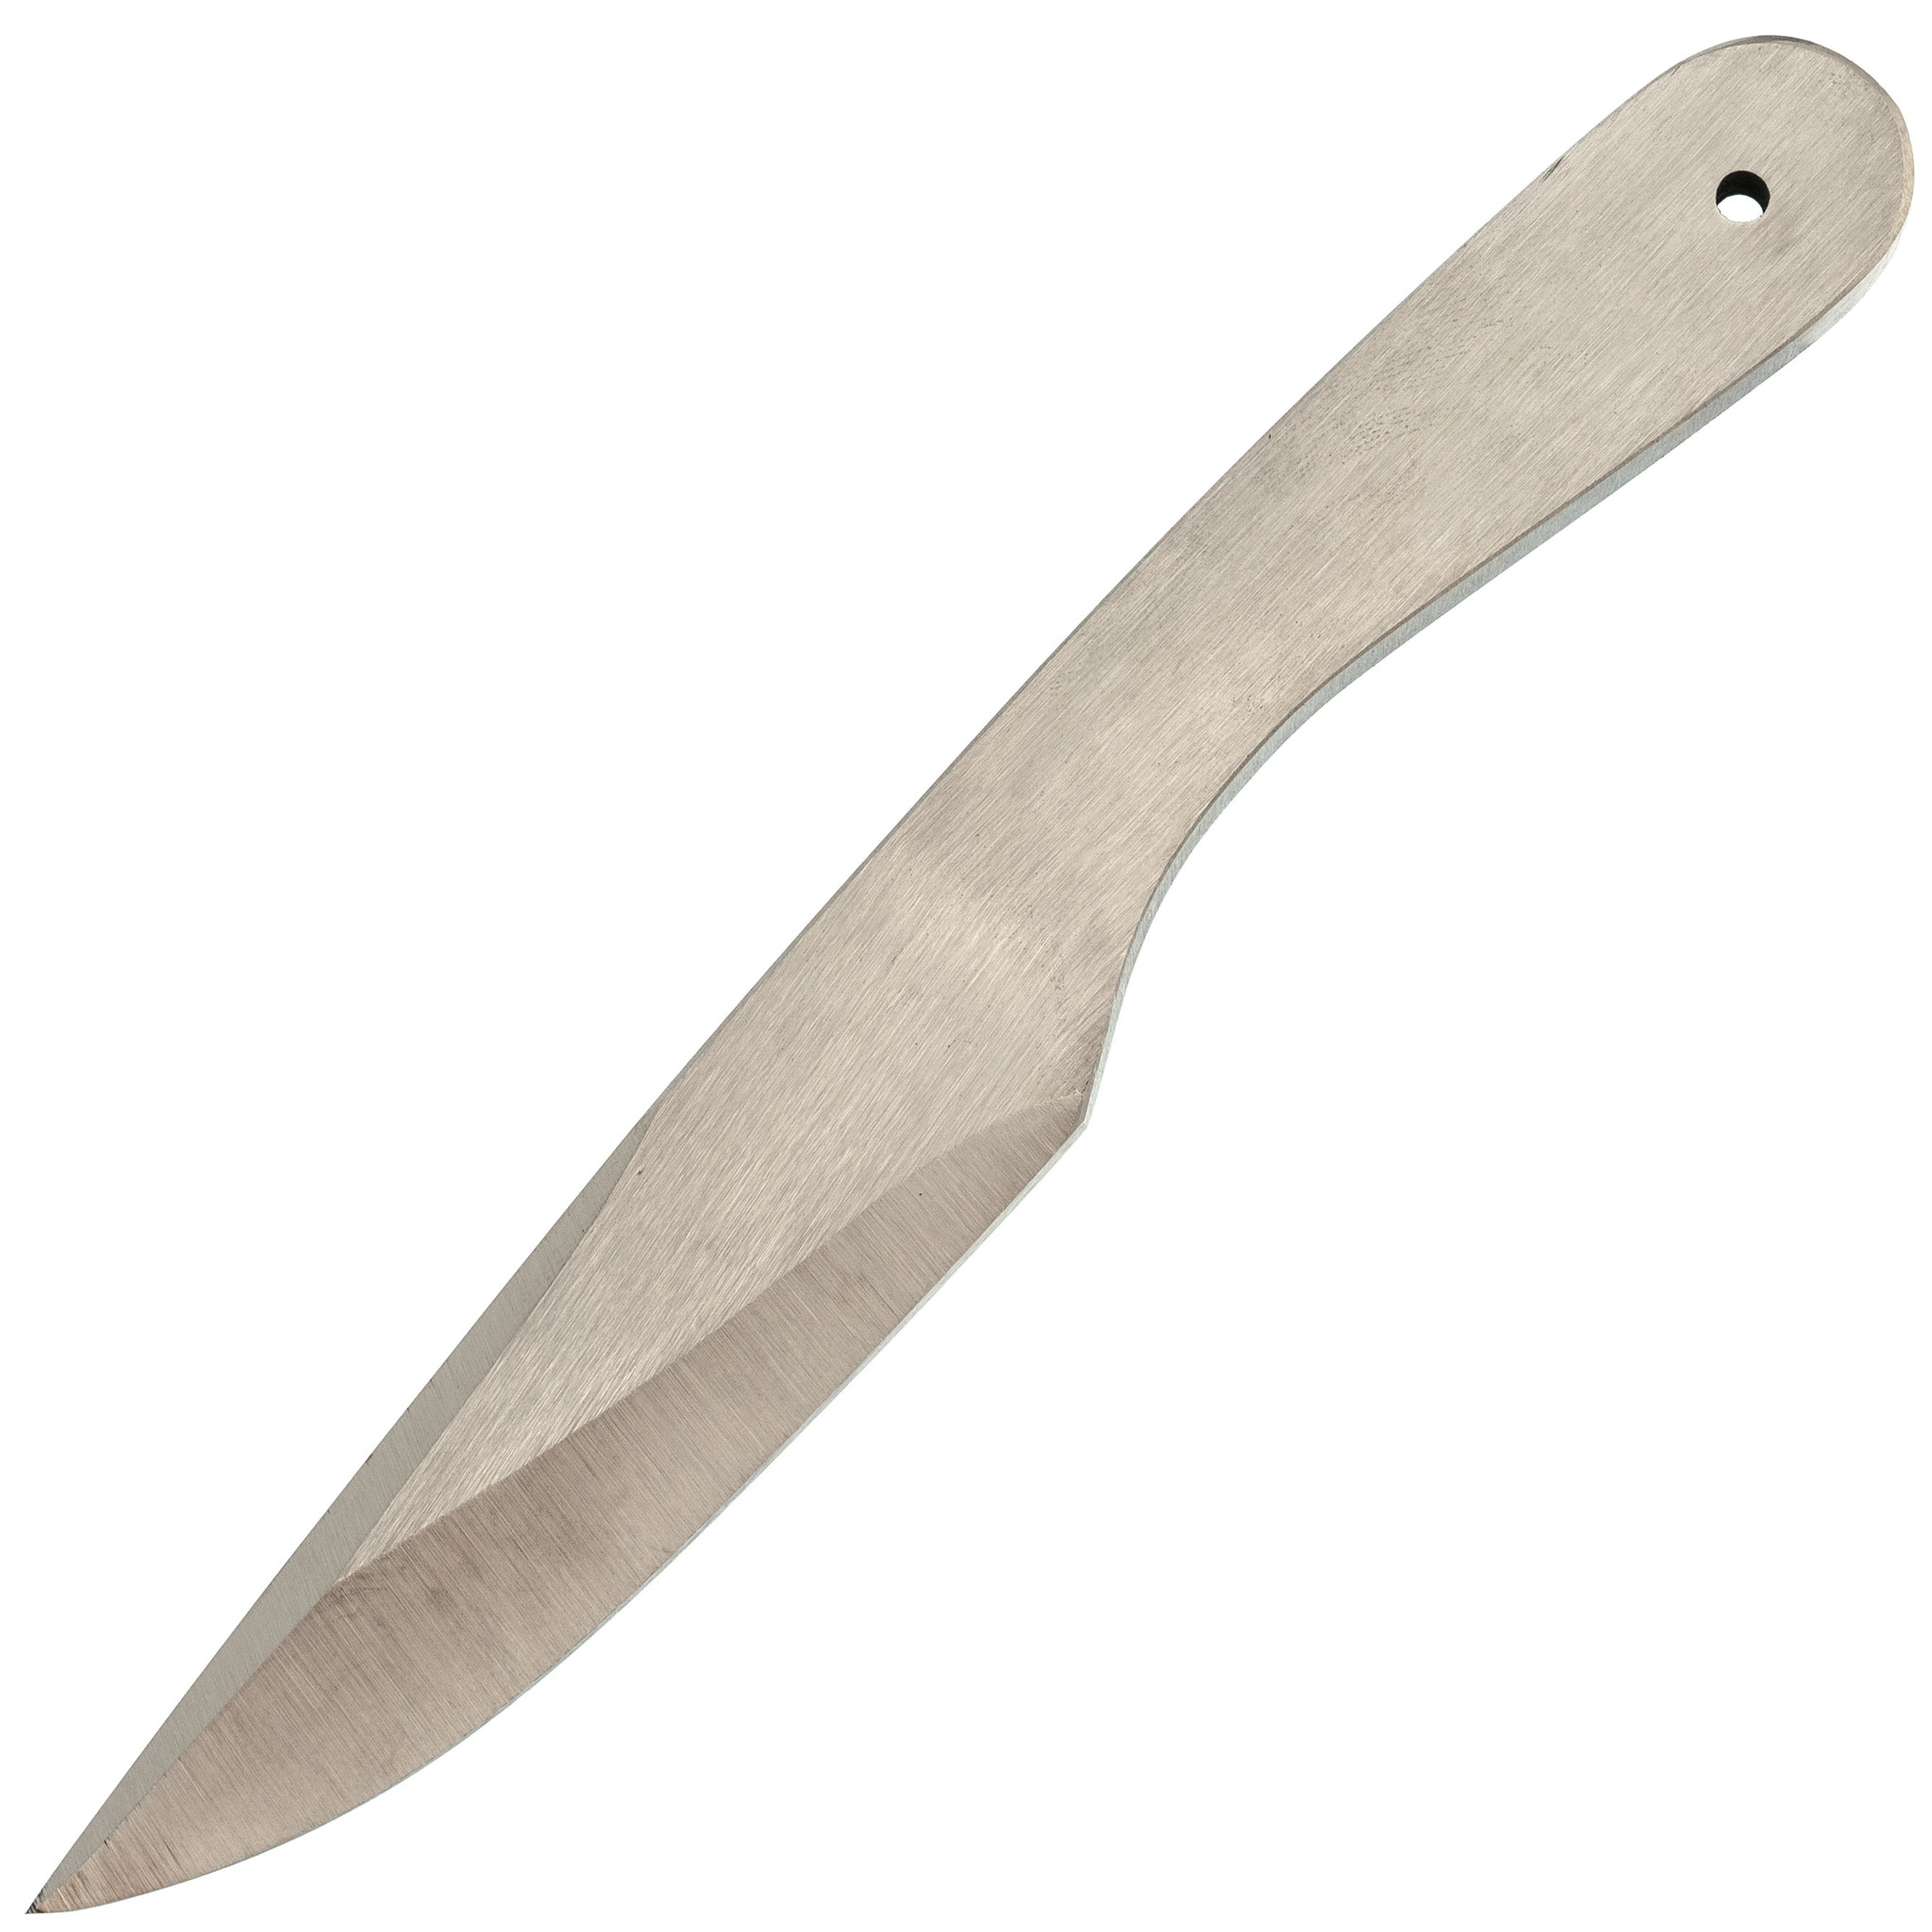 Спортивный нож Осетр мини, Коваль, сталь 65Г спортивный нож осетр мини коваль сталь 65г